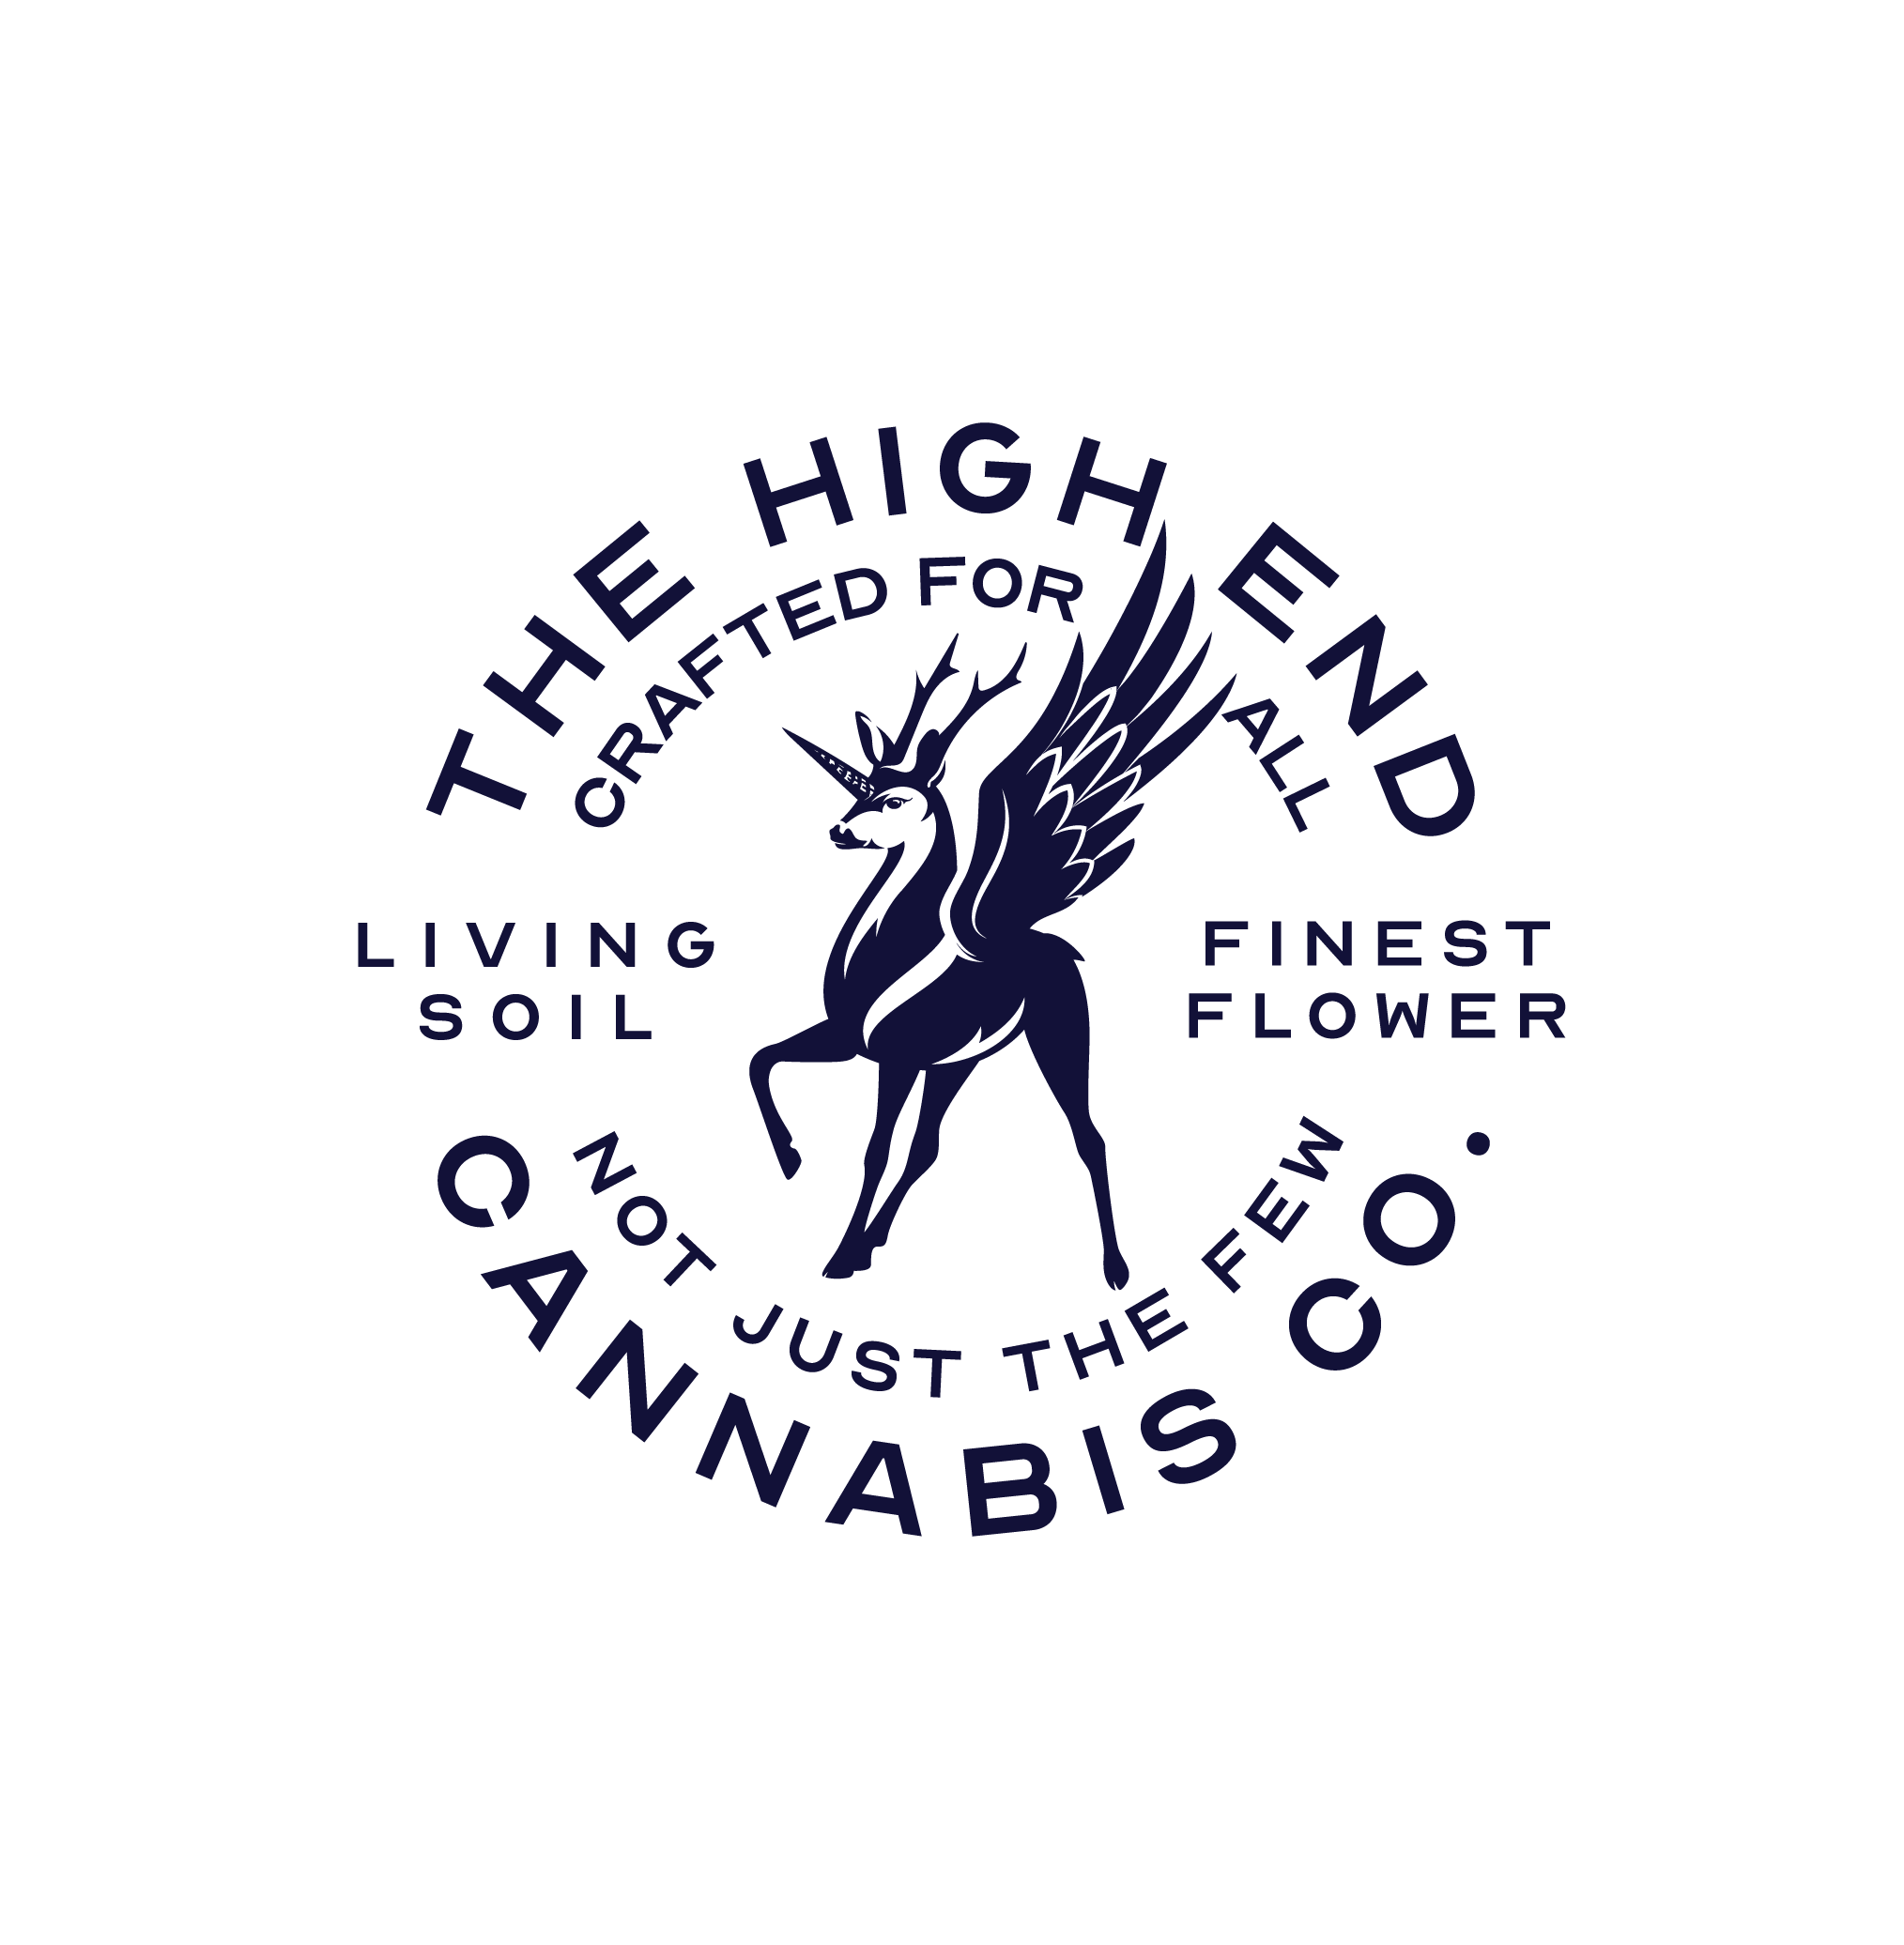 The High End logo